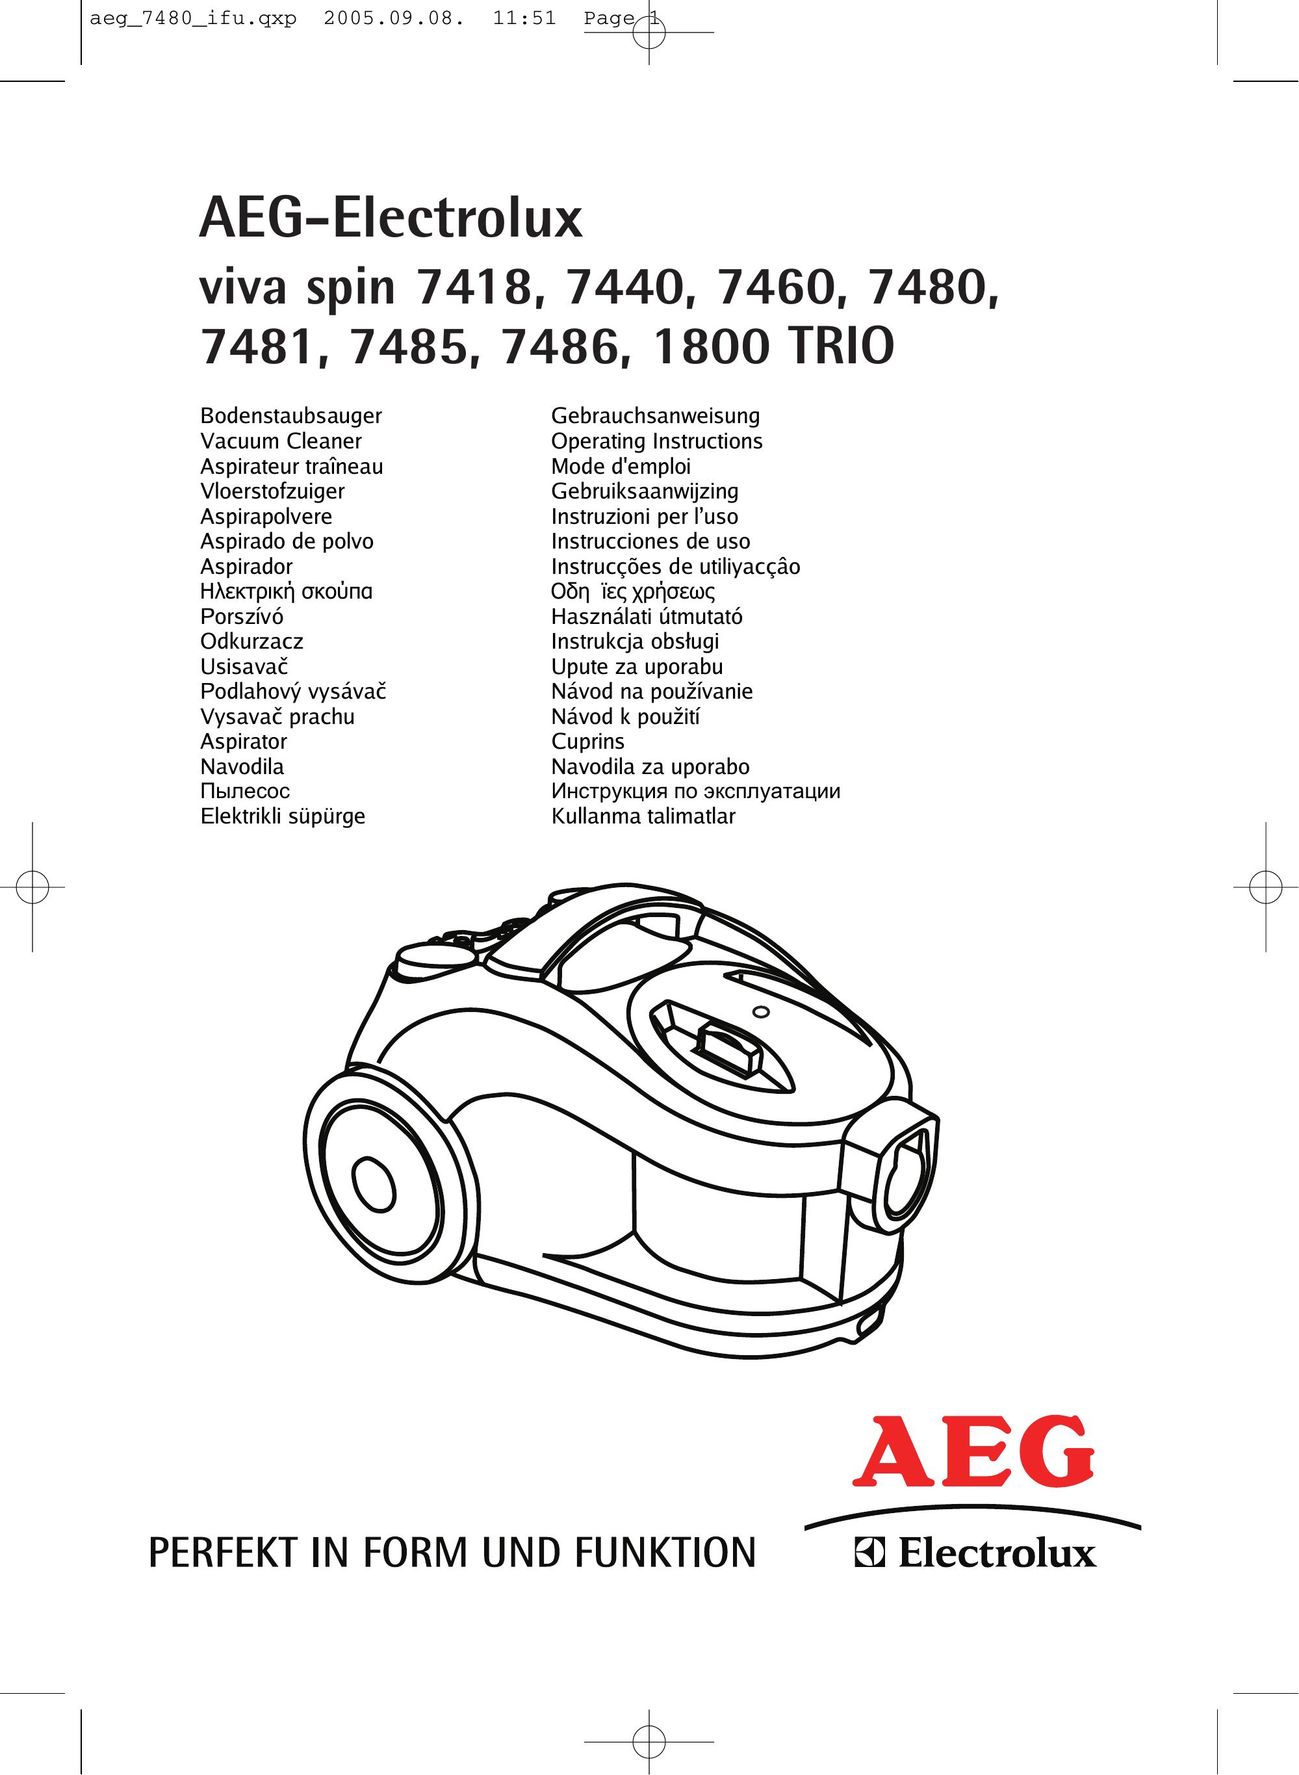 AEG 7460 Vacuum Cleaner User Manual